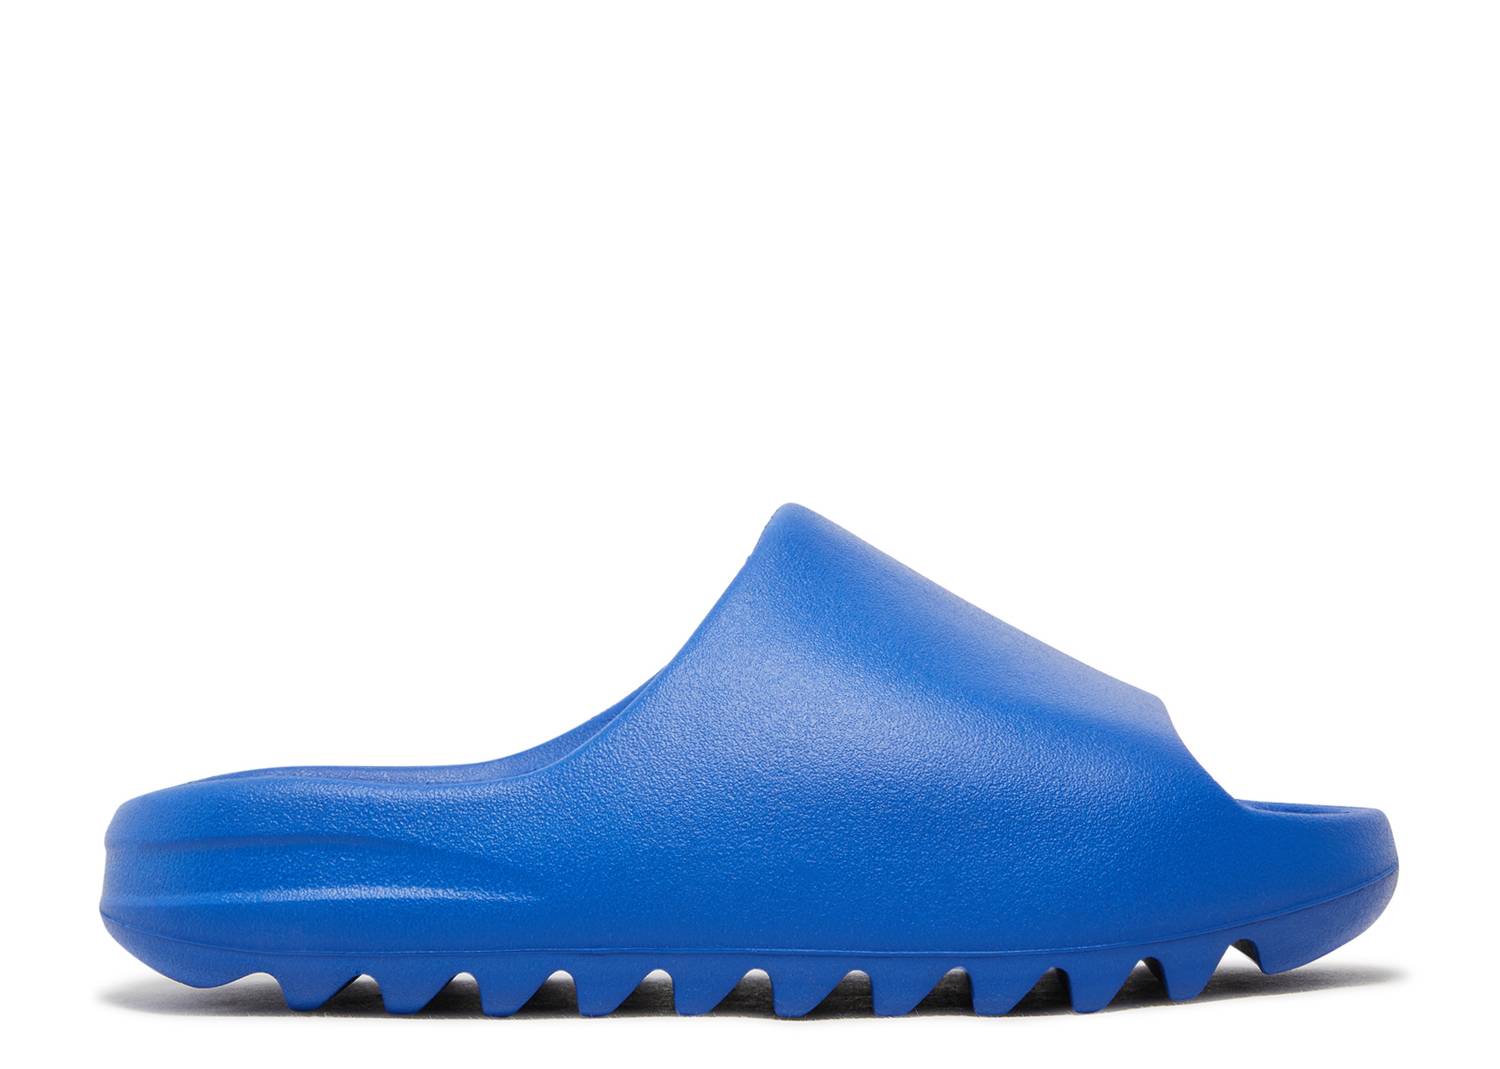 Adidas Yeezy Slide “Azure” – ONE OF ONE GALLERY